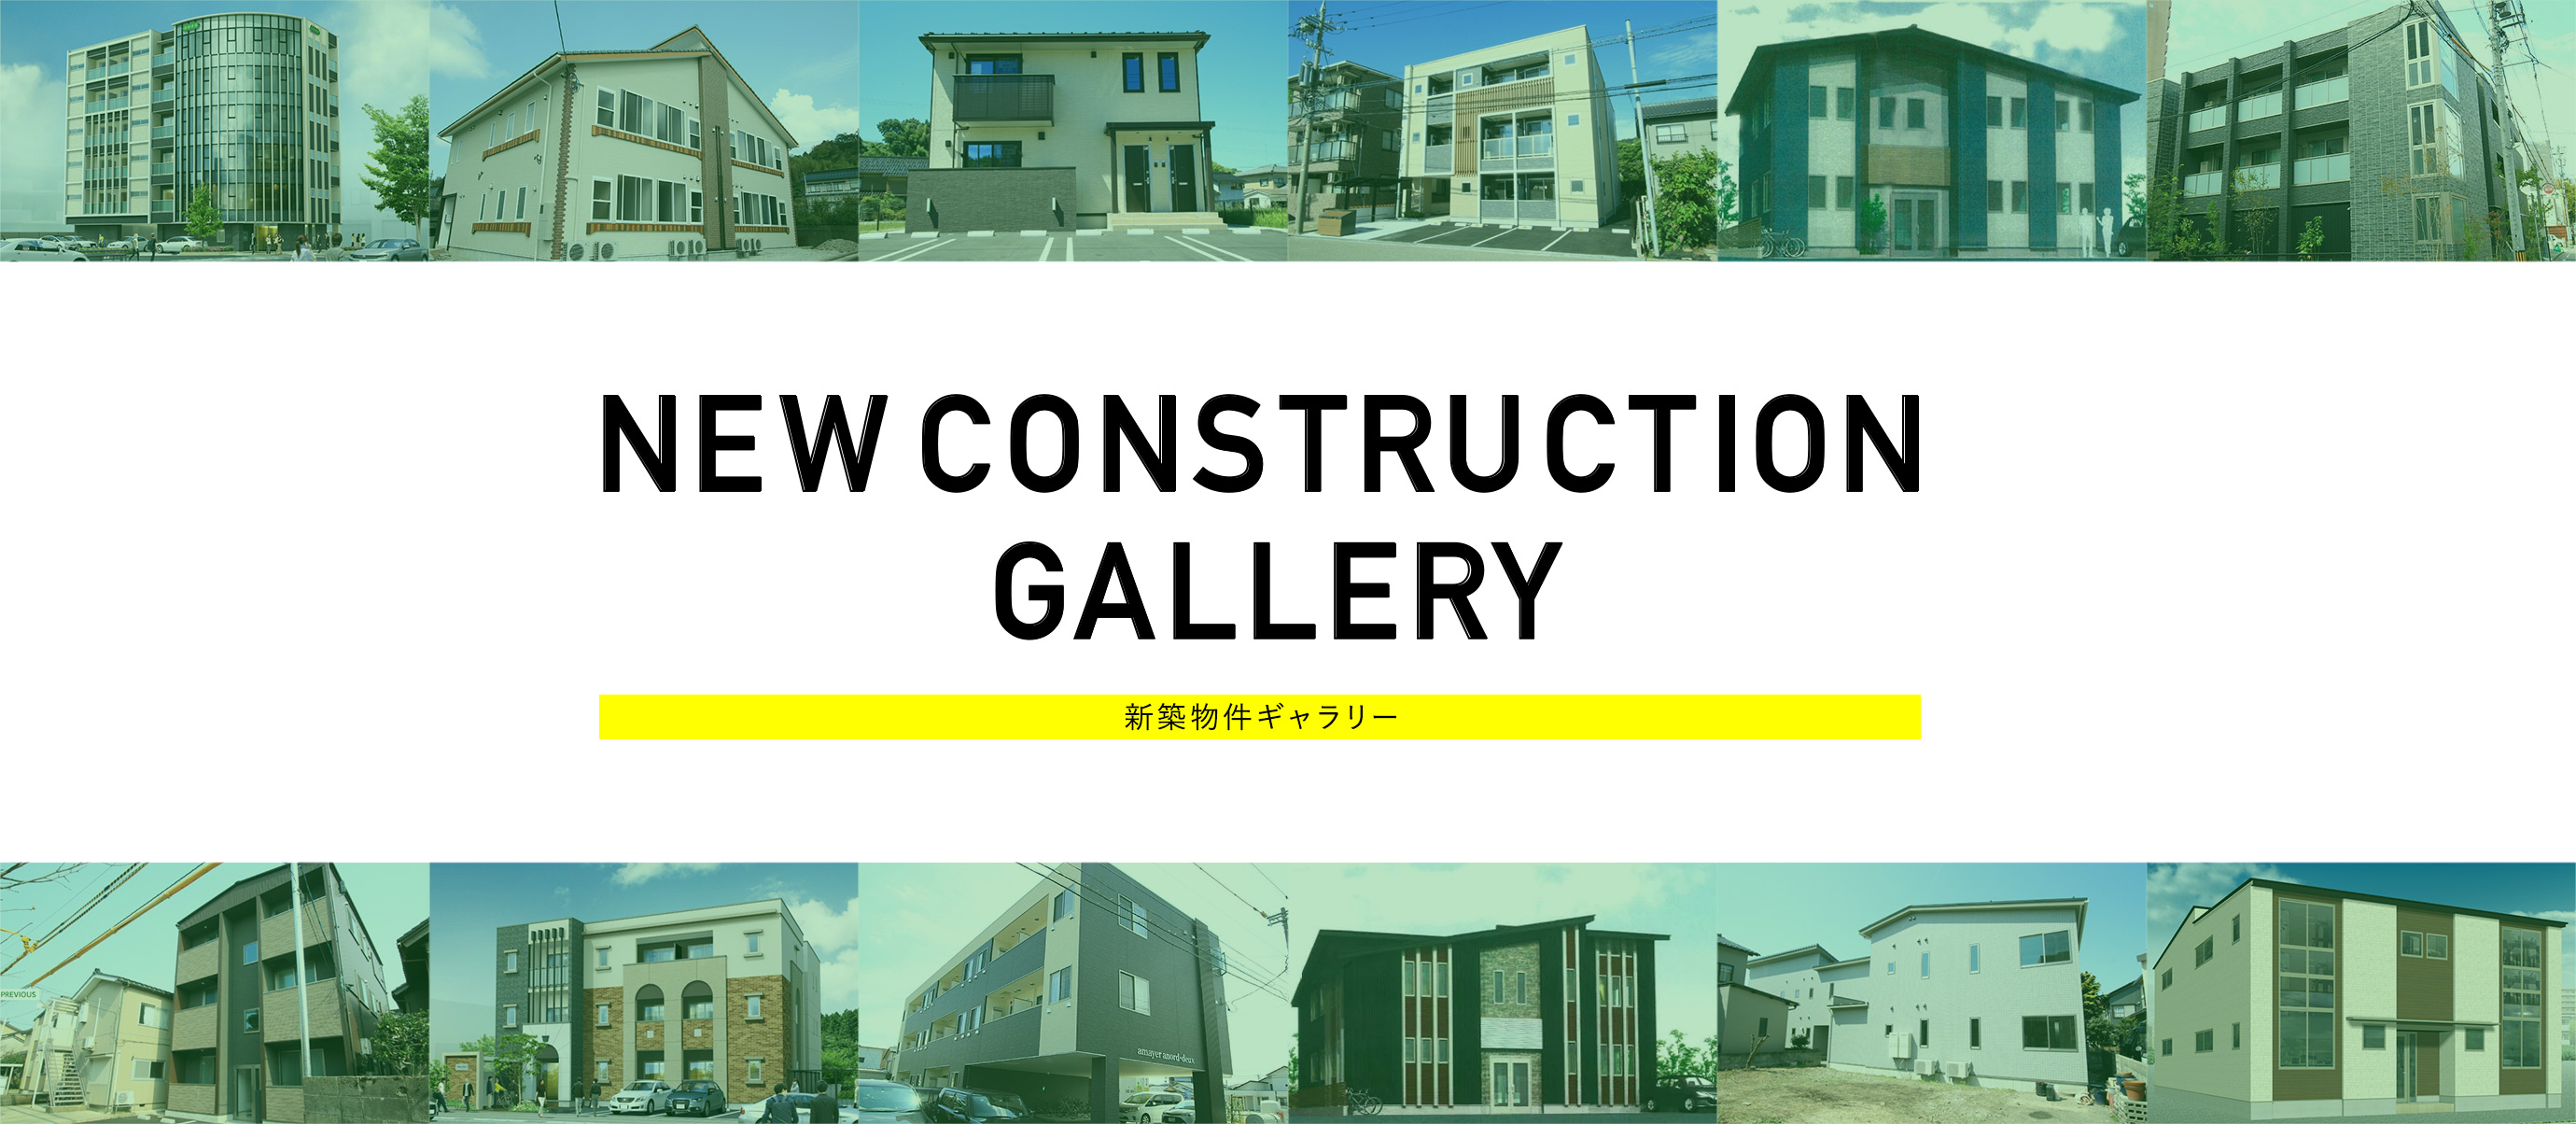 NEW CONSTRUCTION GALLERY 新築物件ギャラリー